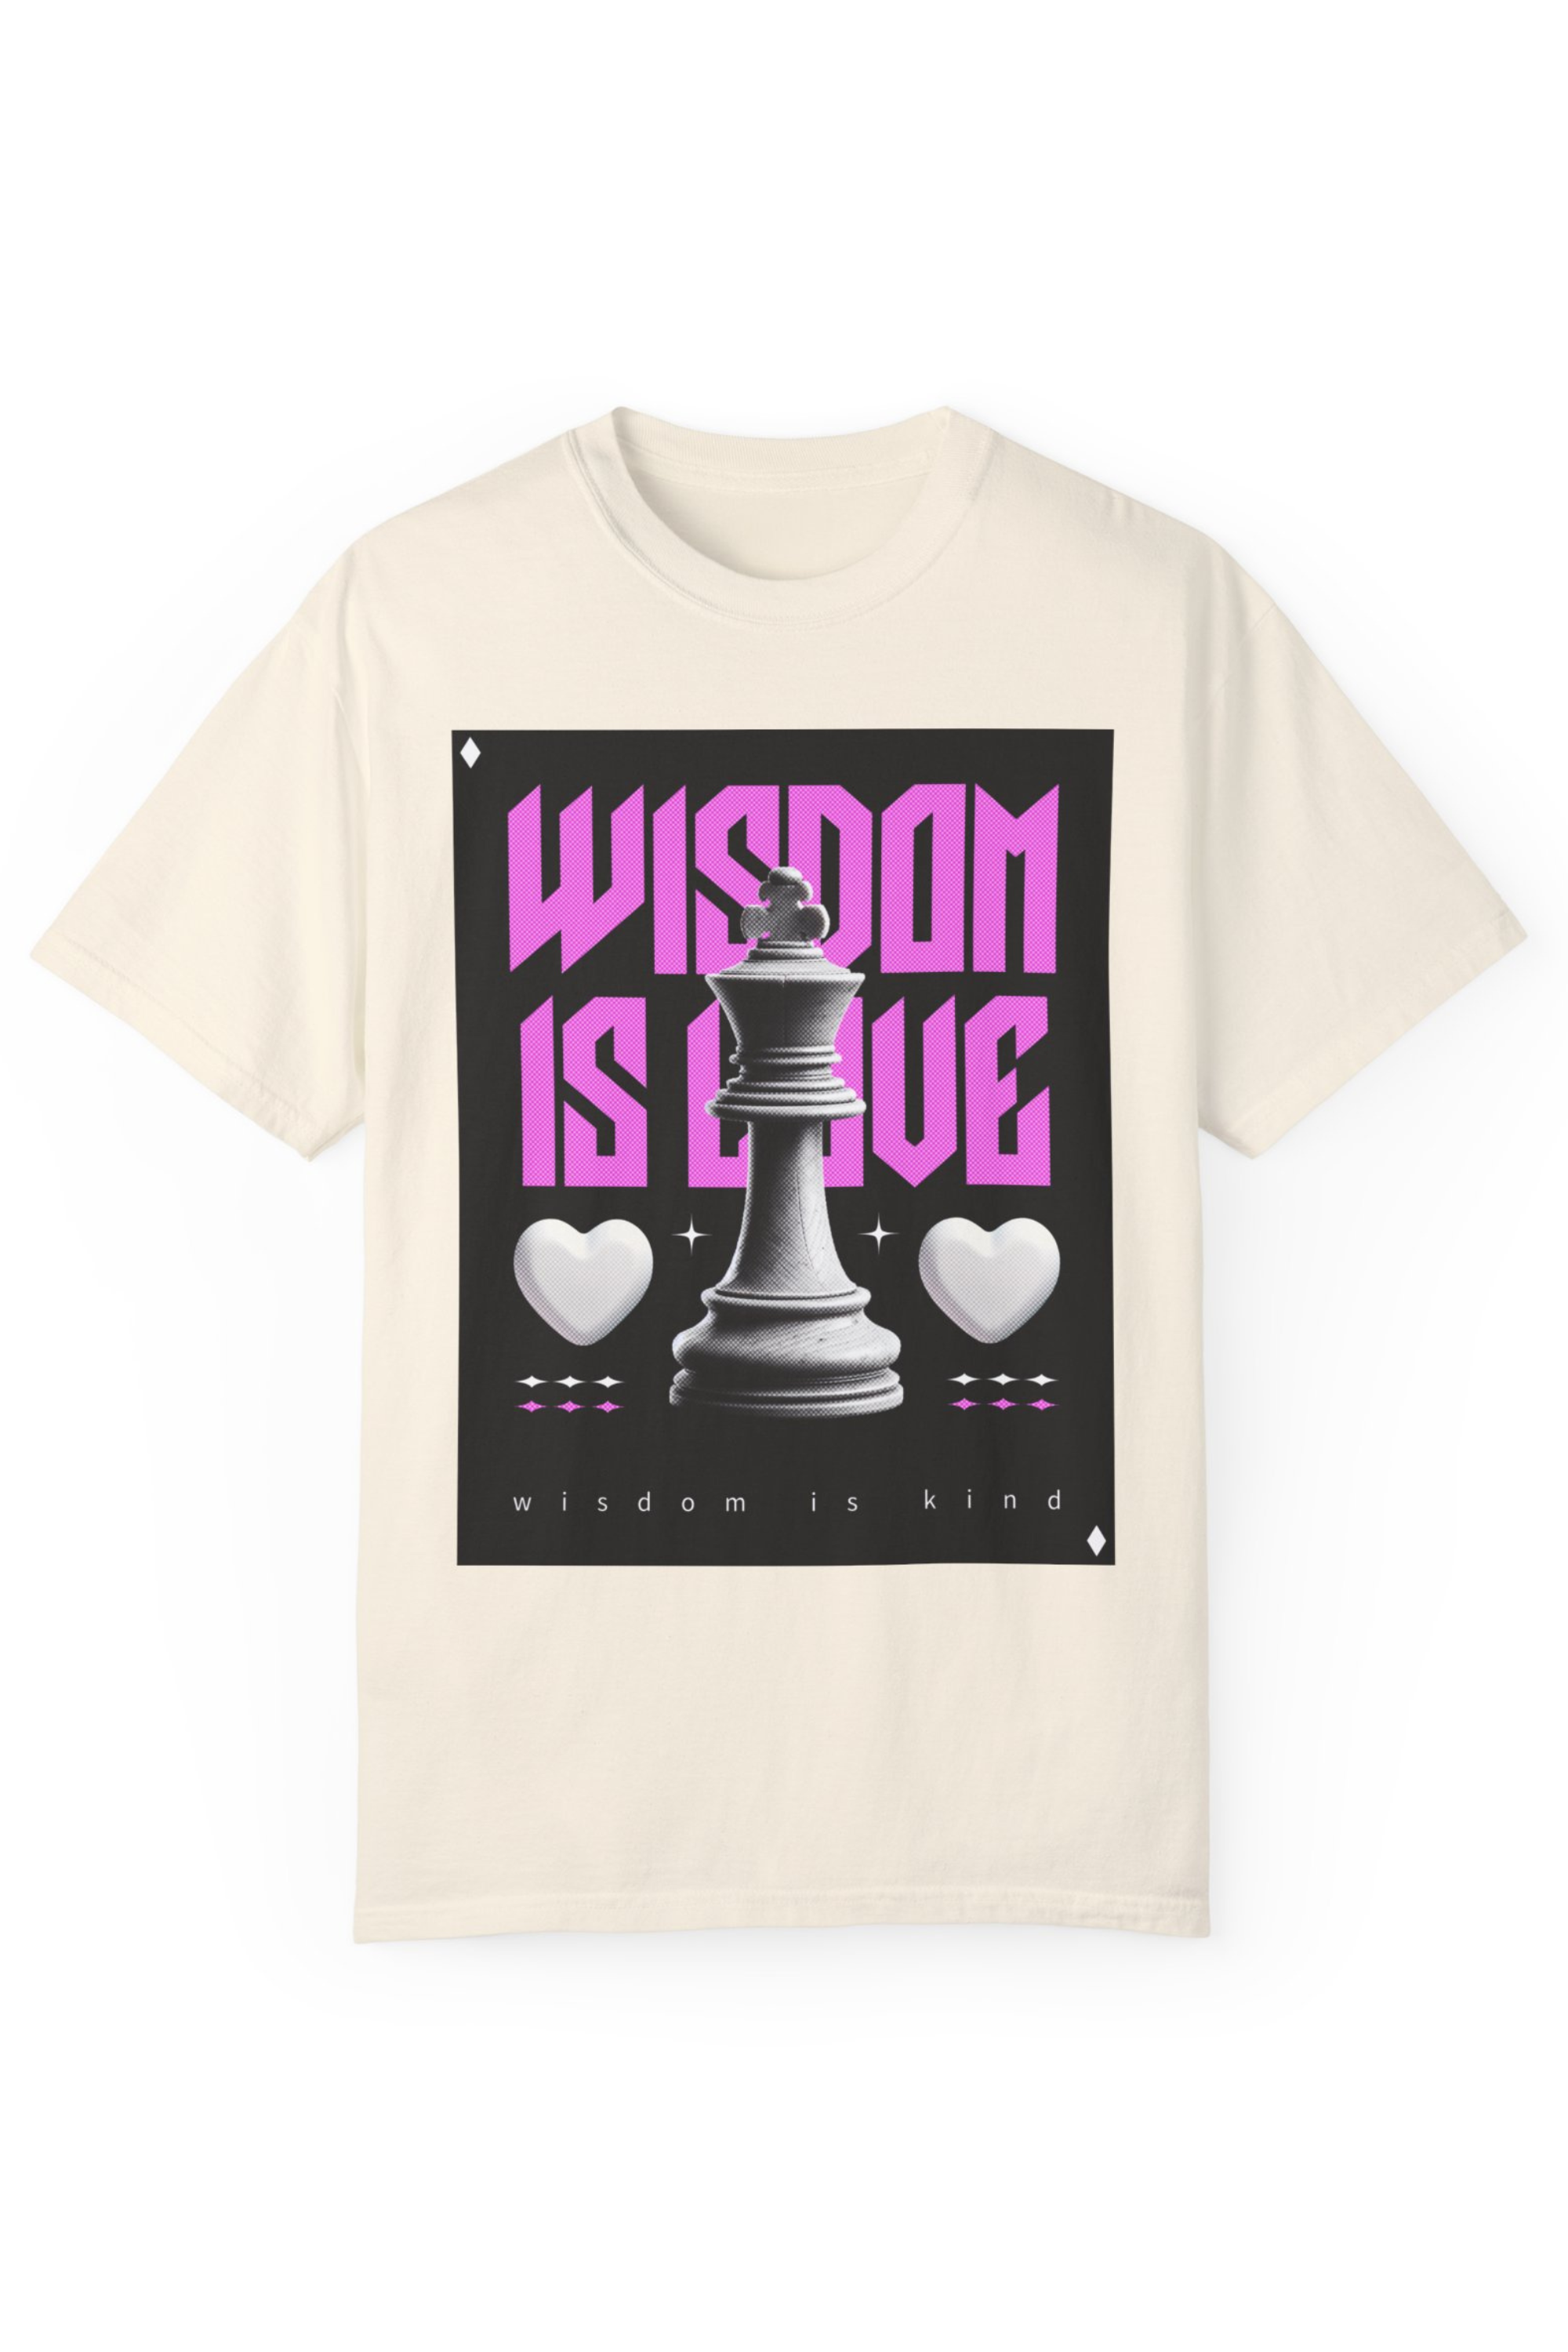 GOLDxTEAL graphic t-shirt. Wisdom is love t-shirt.